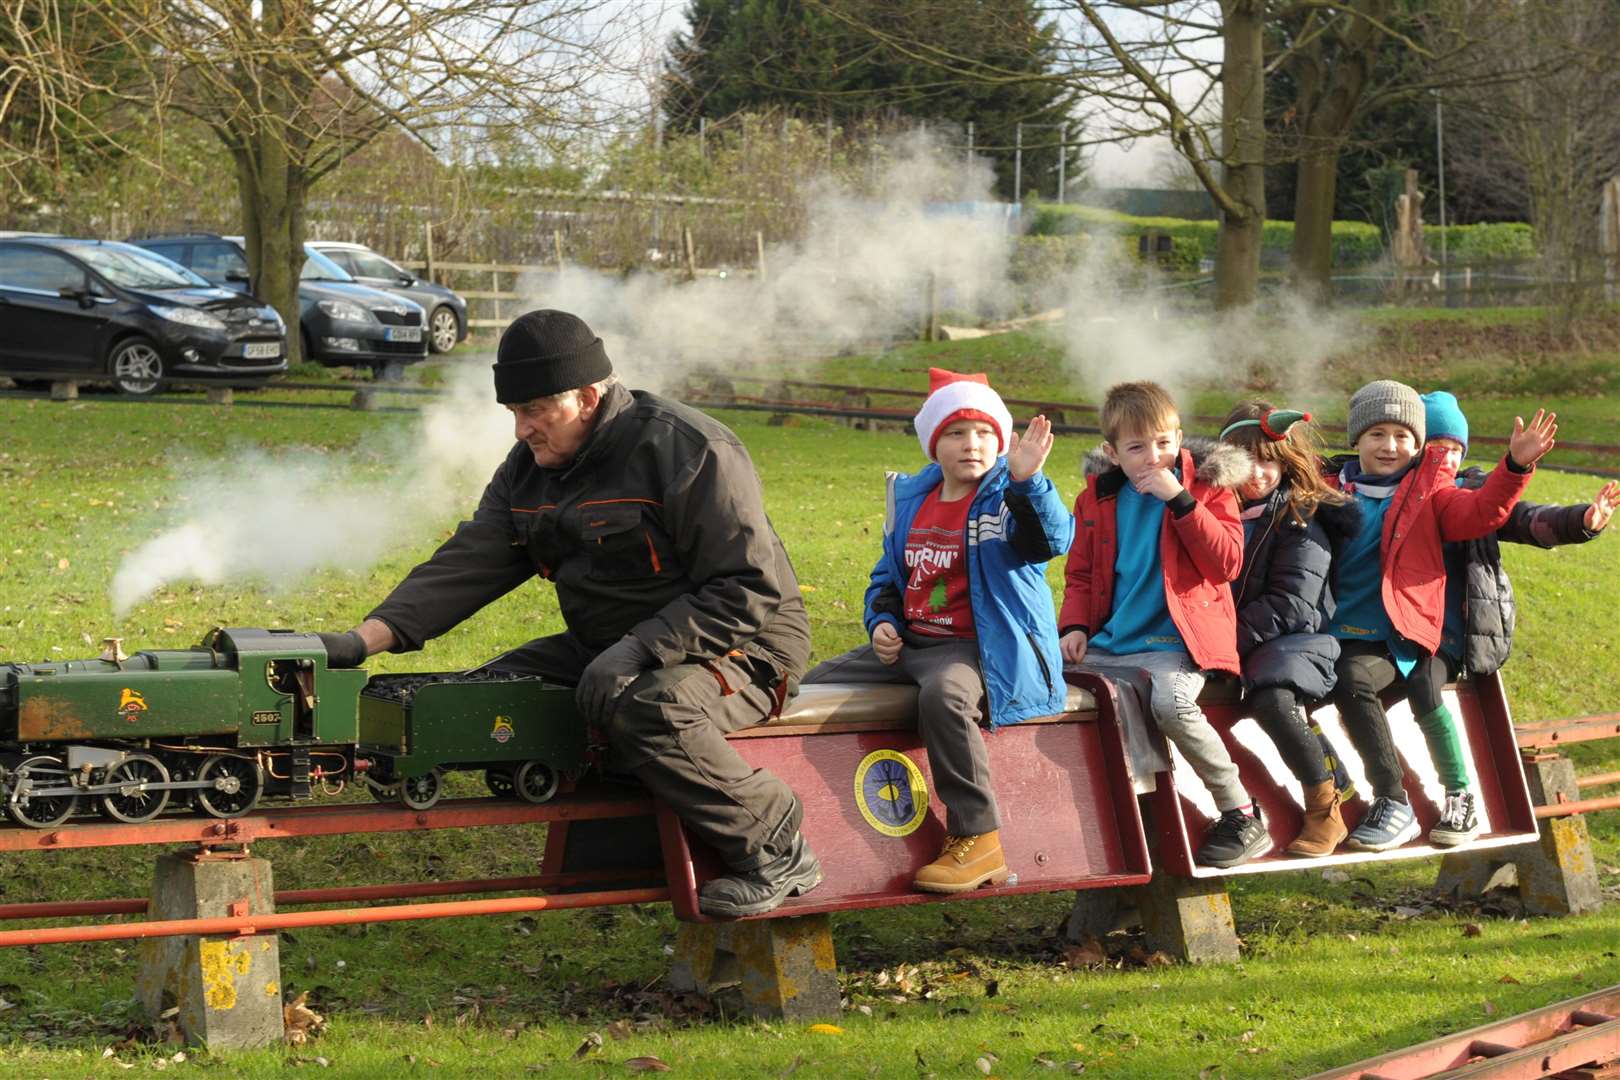 Special Santa train rides for kids